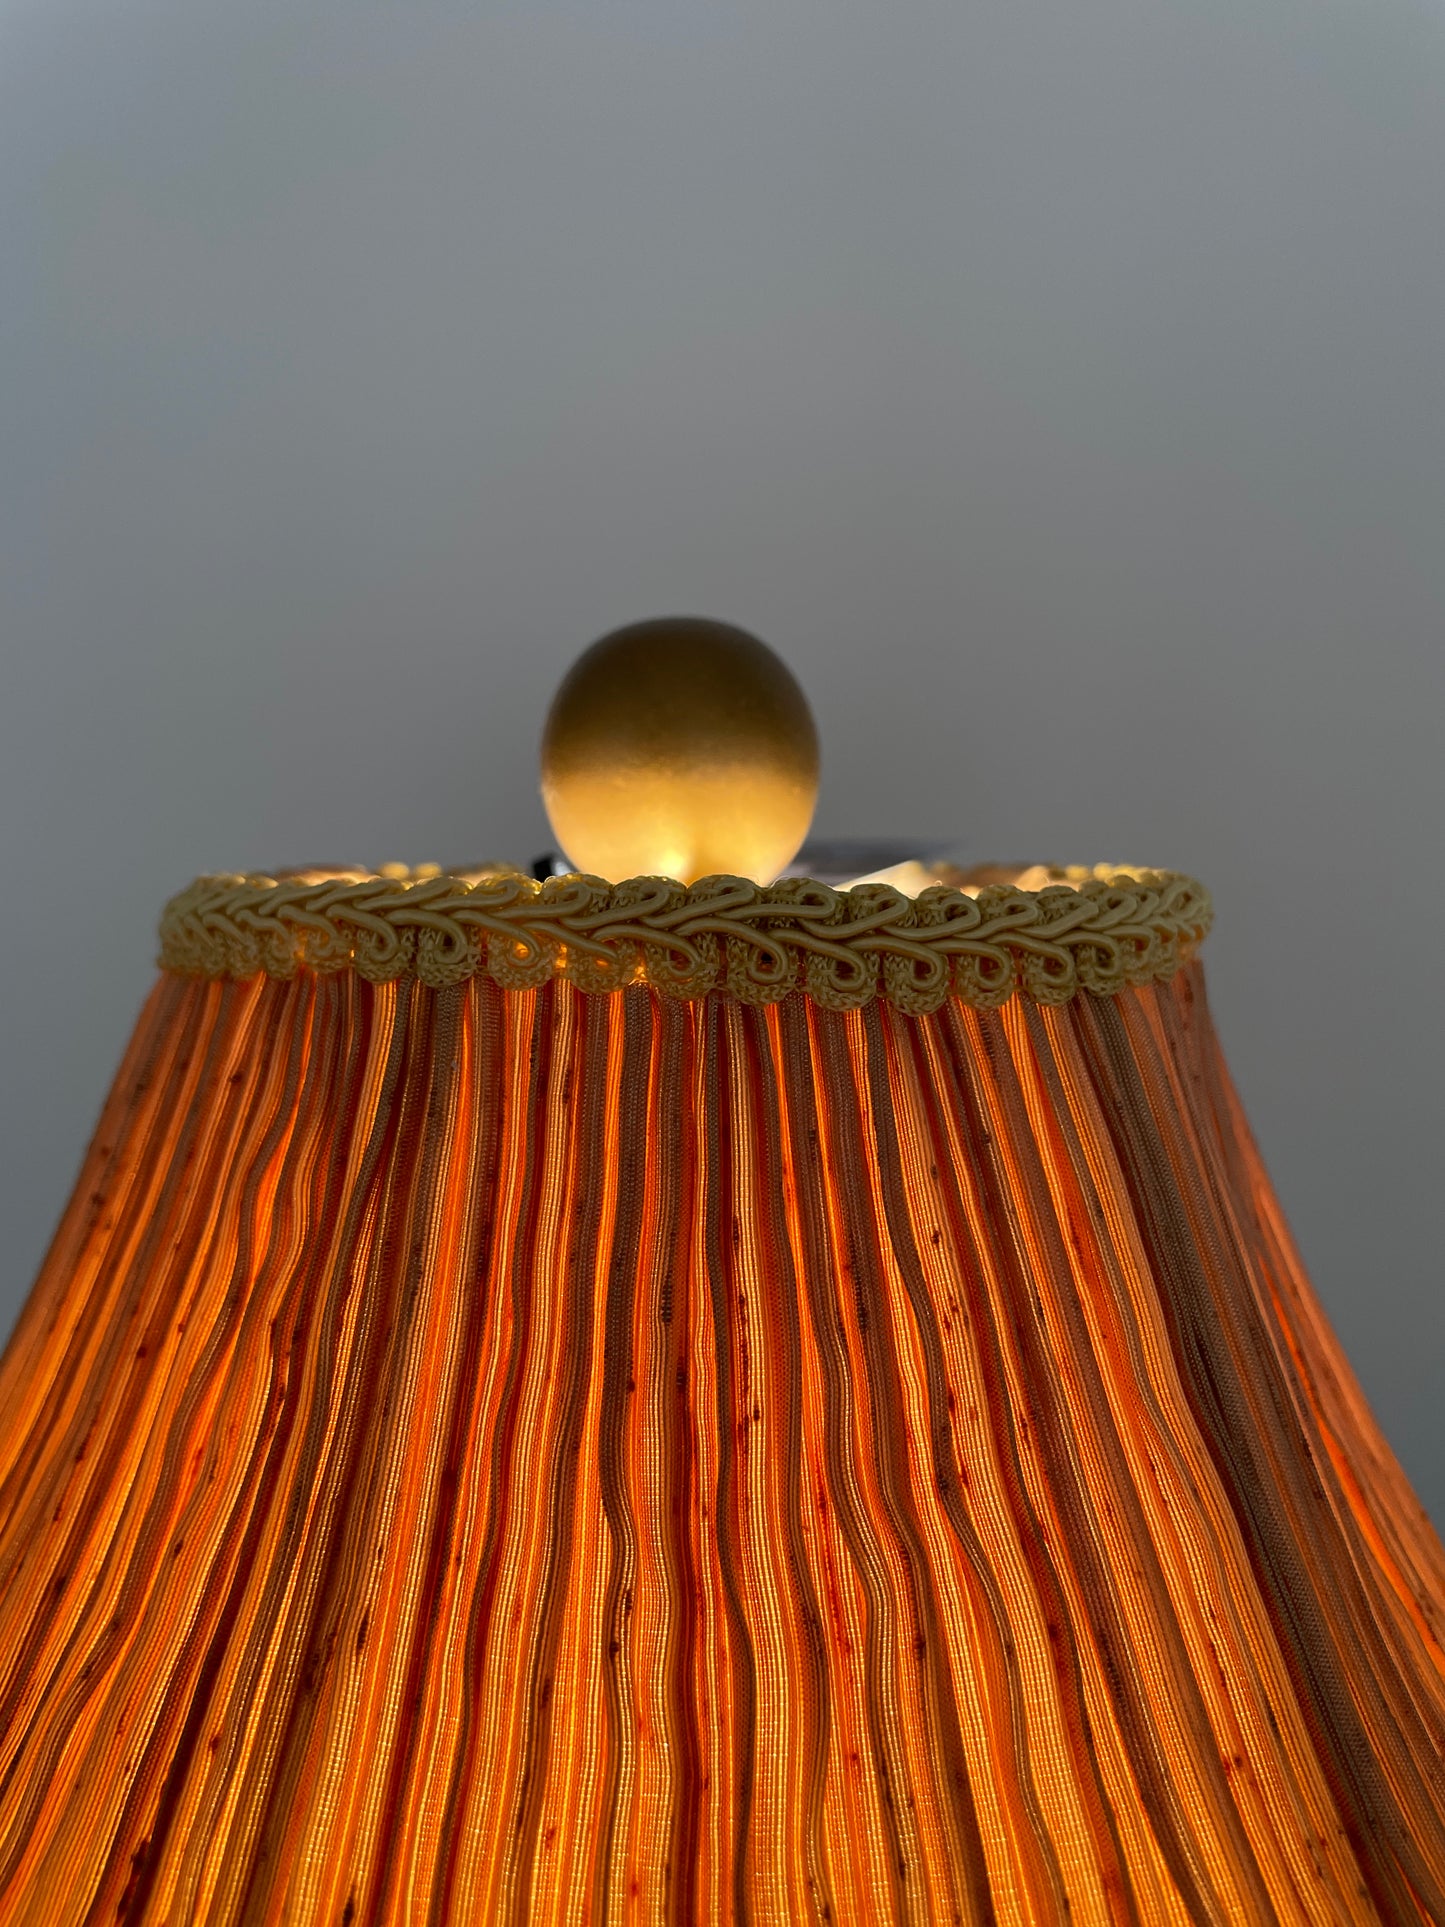 Antique Gold Chalkware Lamp